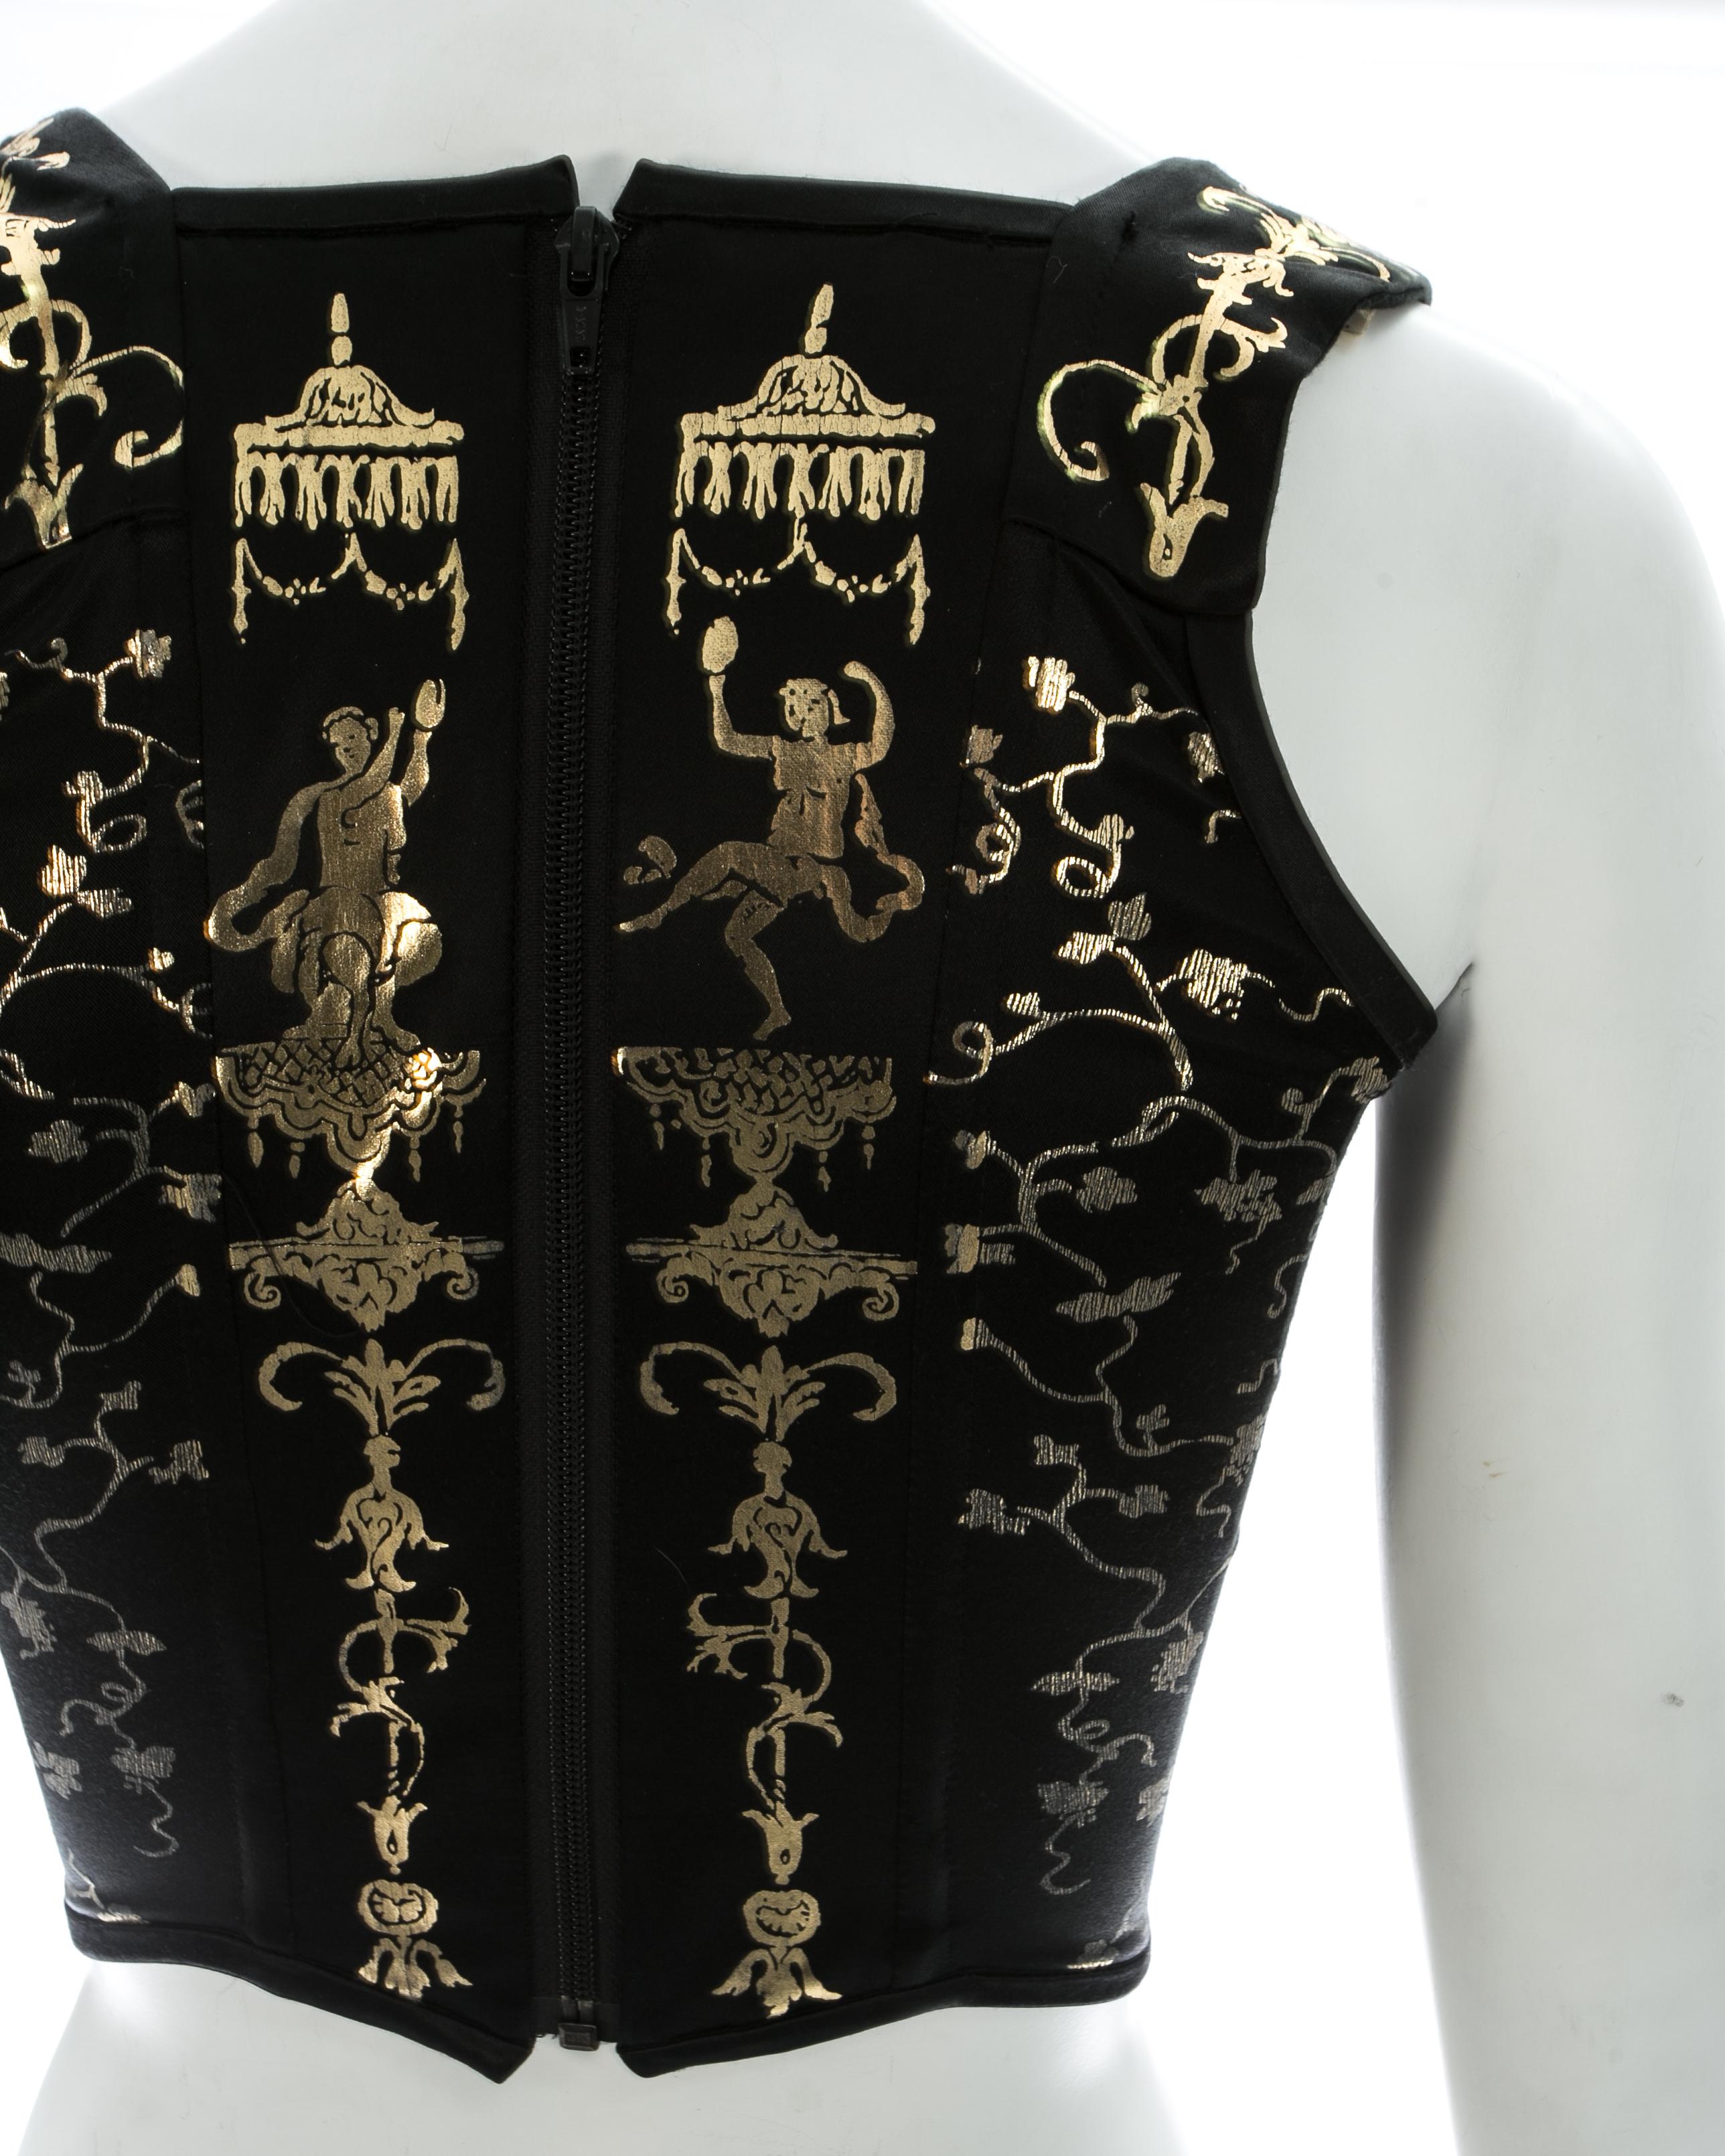 Black Viviene Westwood black satin corset with metallic gold motifs, fw 1990 For Sale